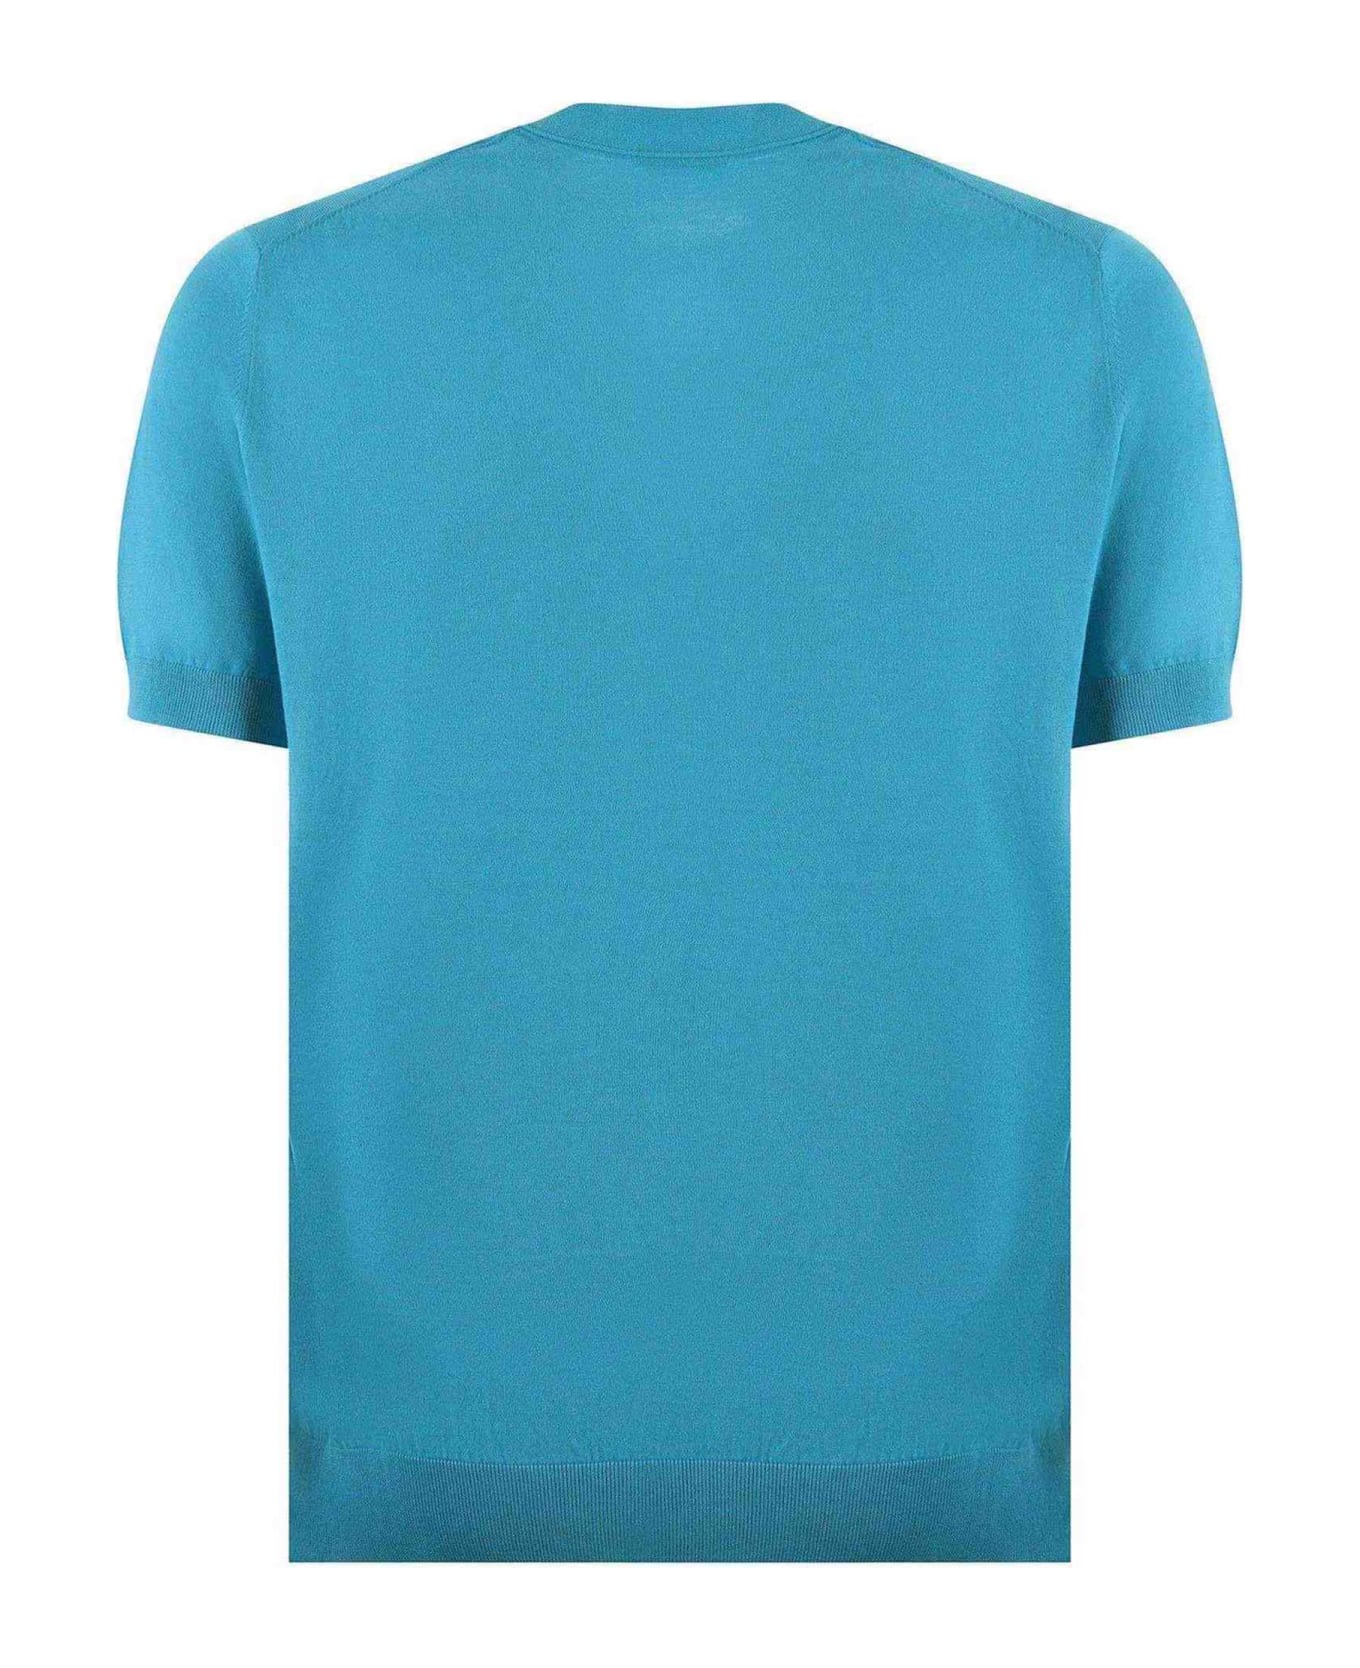 Paolo Pecora T-shirt - Turchese シャツ